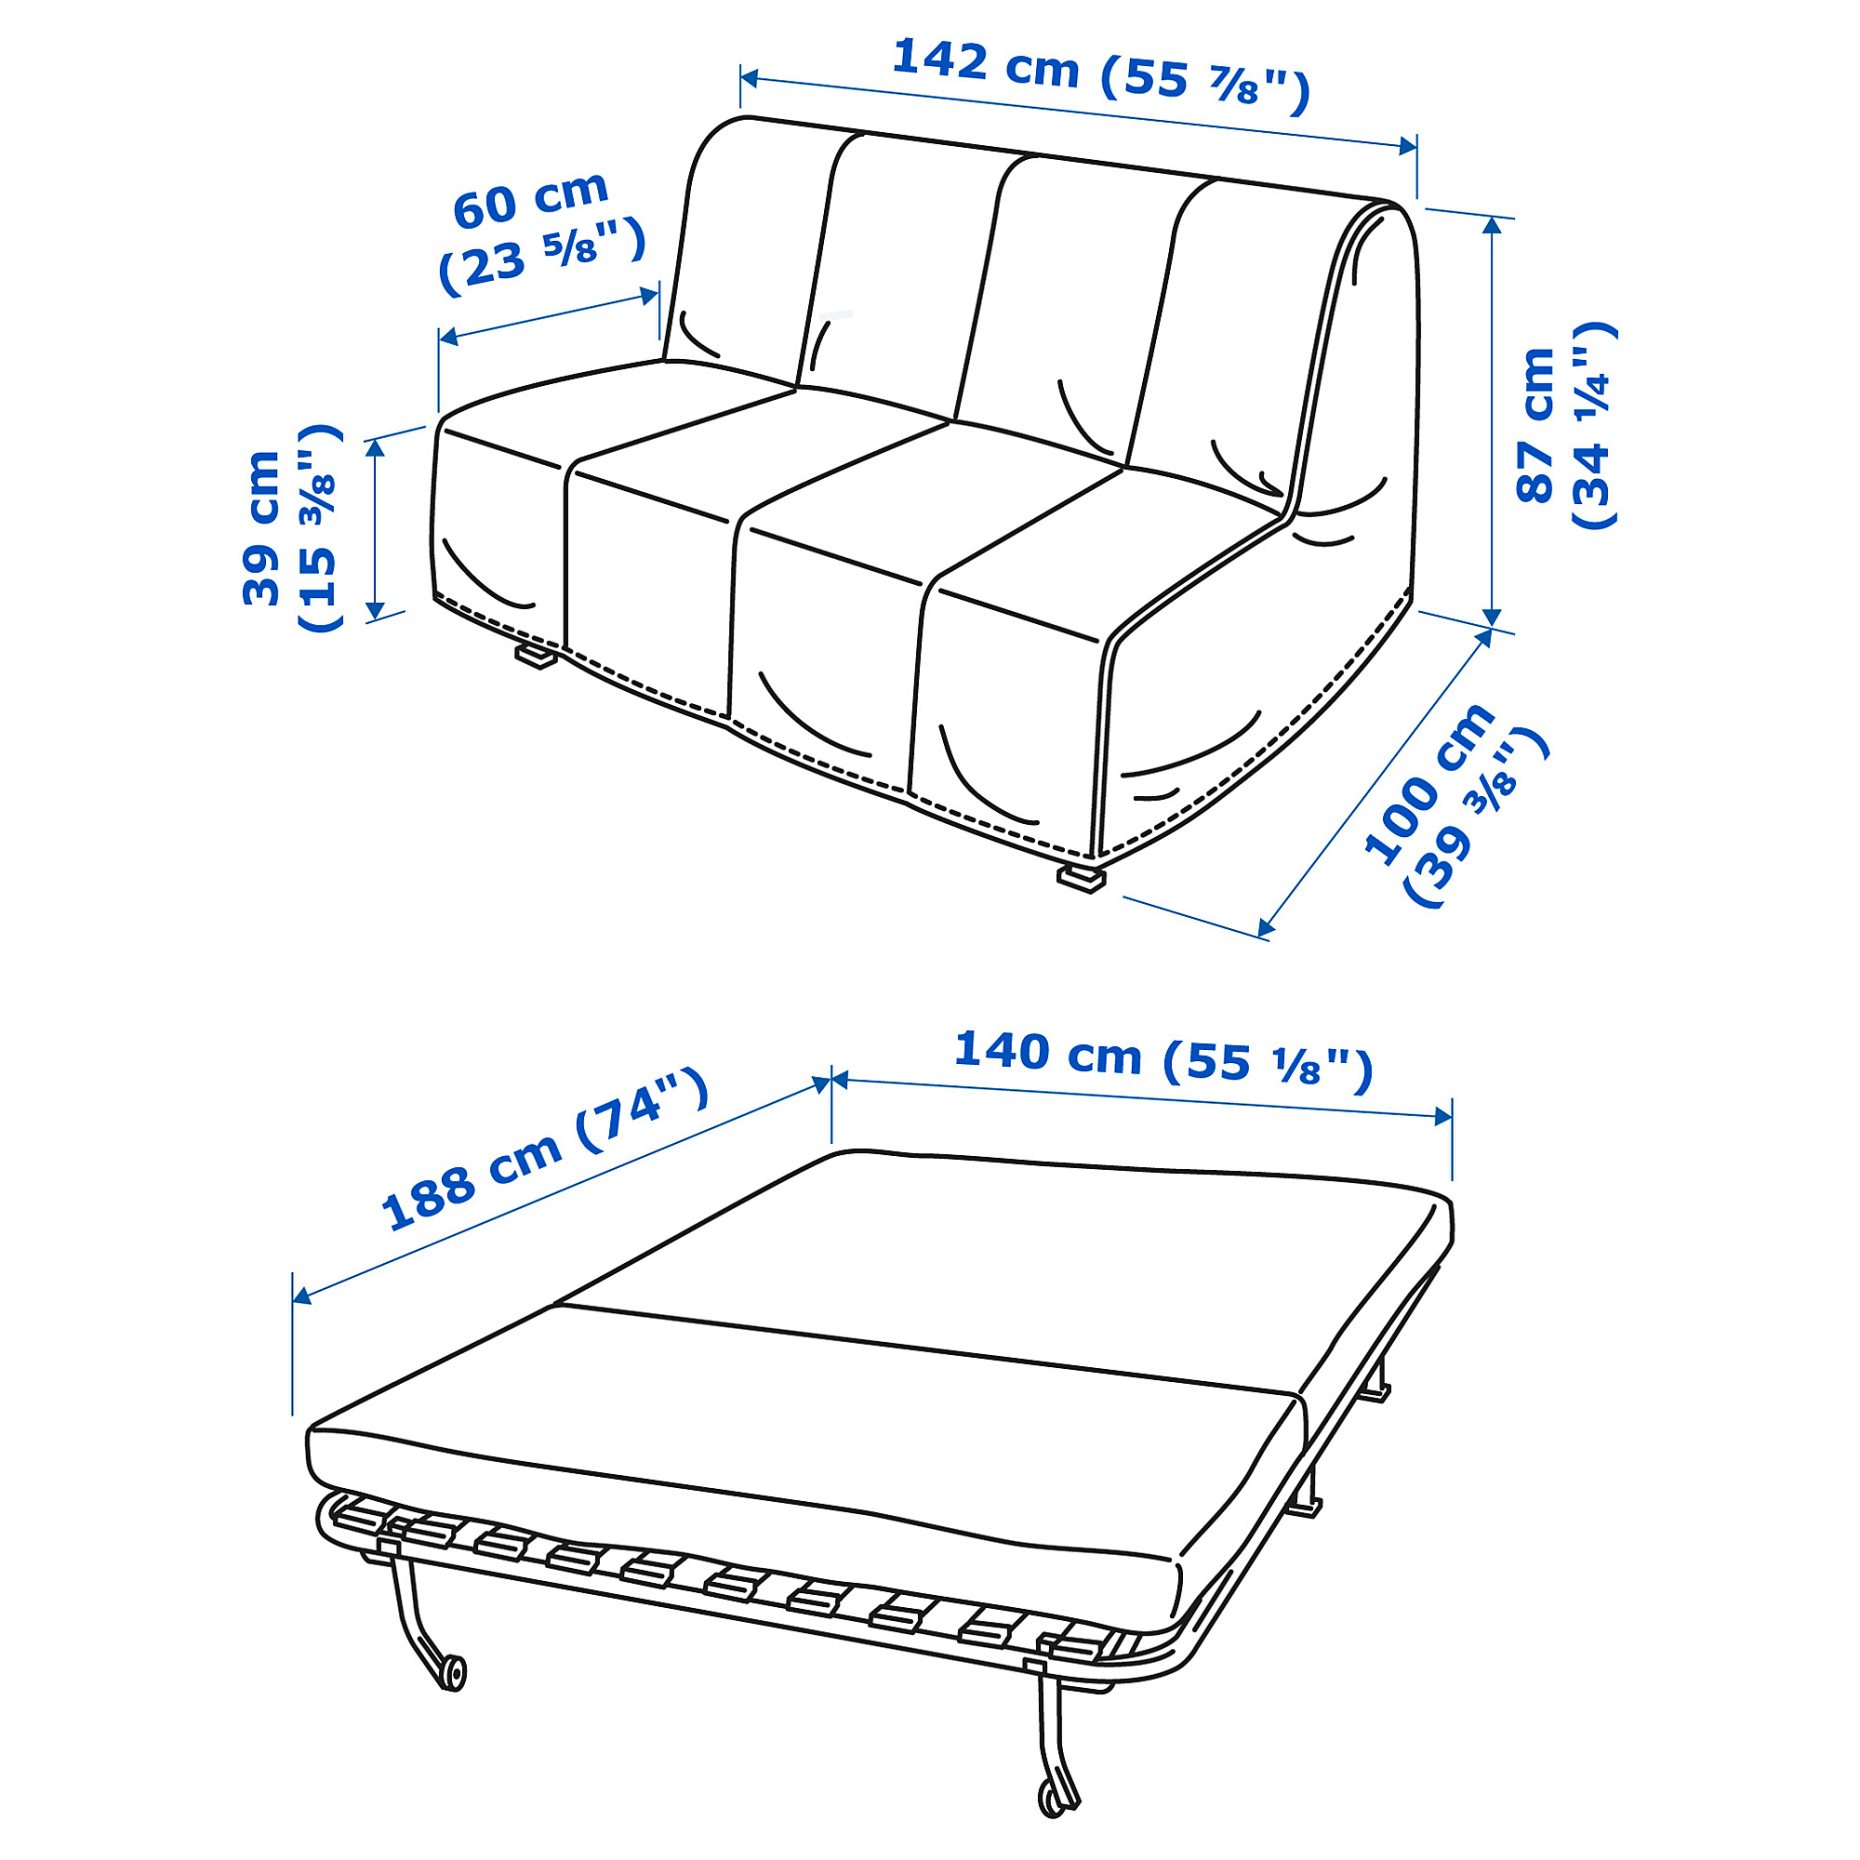 LYCKSELE HAVET, διθέσιος καναπές-κρεβάτι, 293.871.38